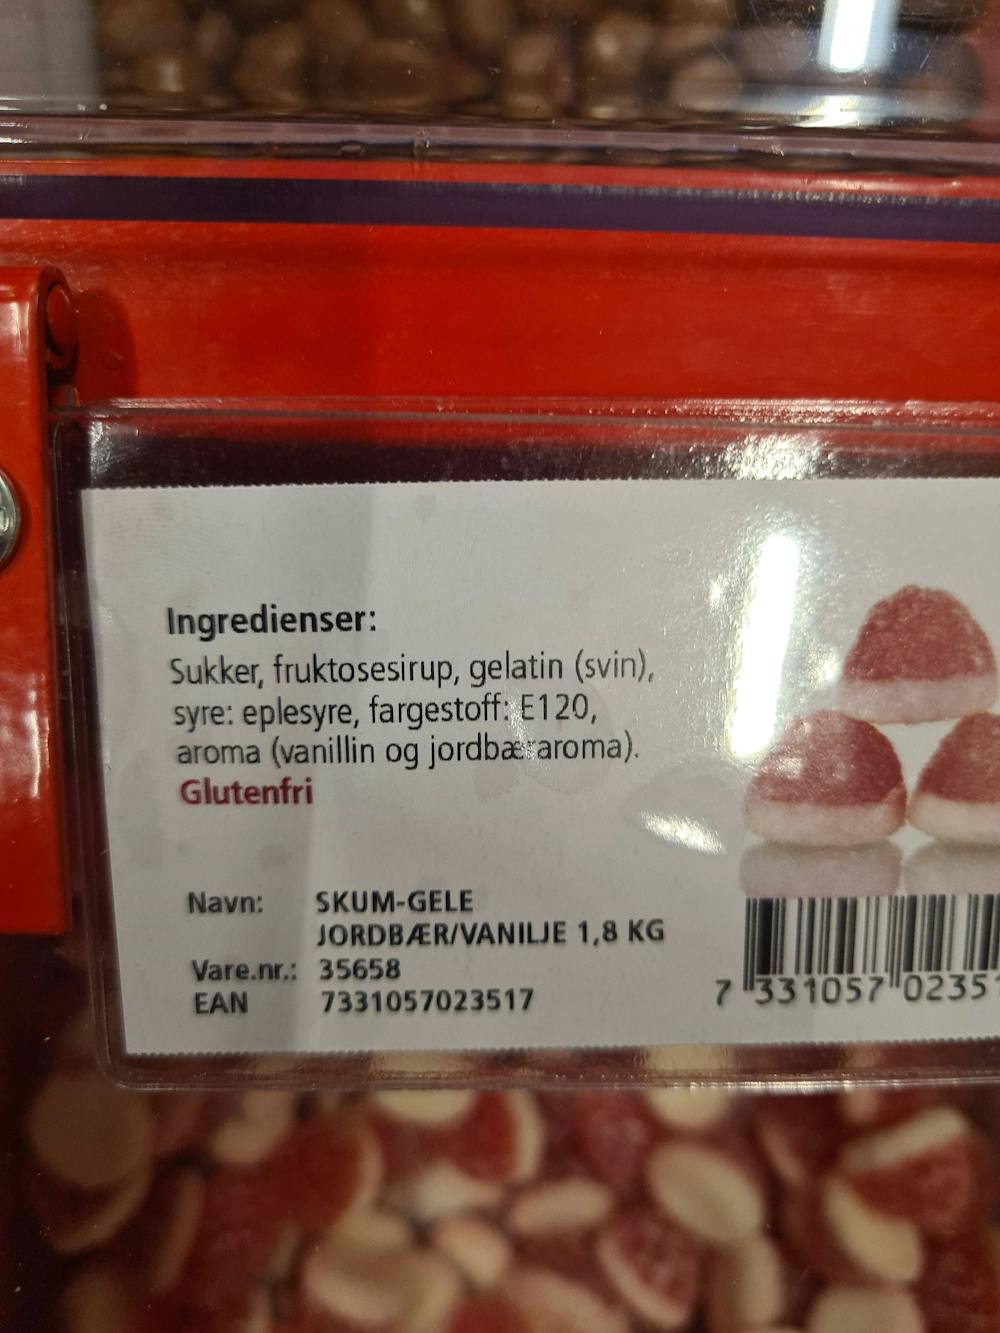 Ingredienslisten til Skum-gele, jordbær/vanilje